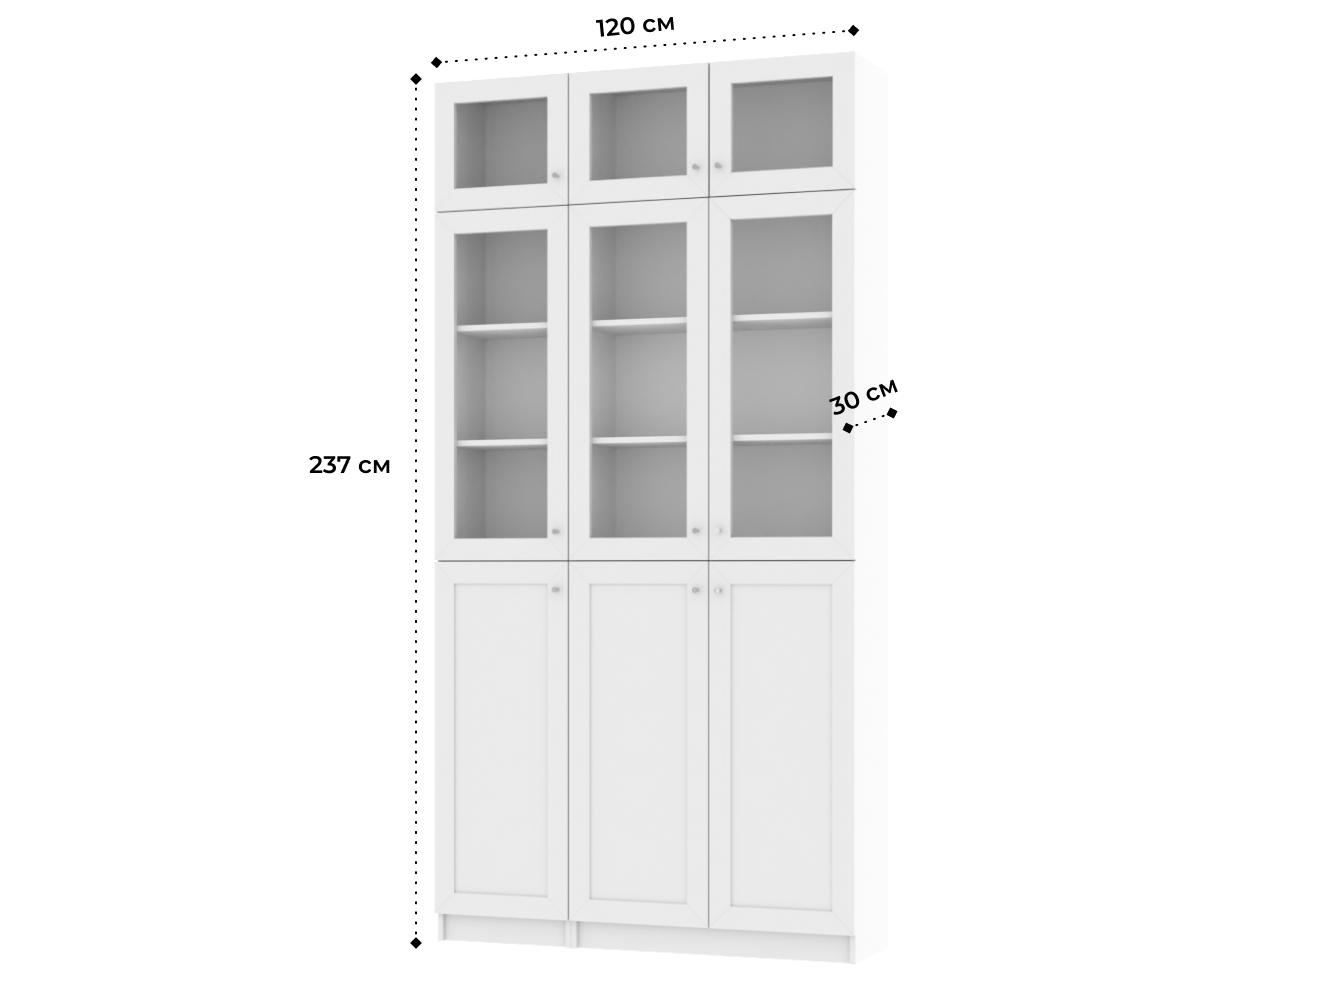  Книжный шкаф Билли 354 white ИКЕА (IKEA) изображение товара